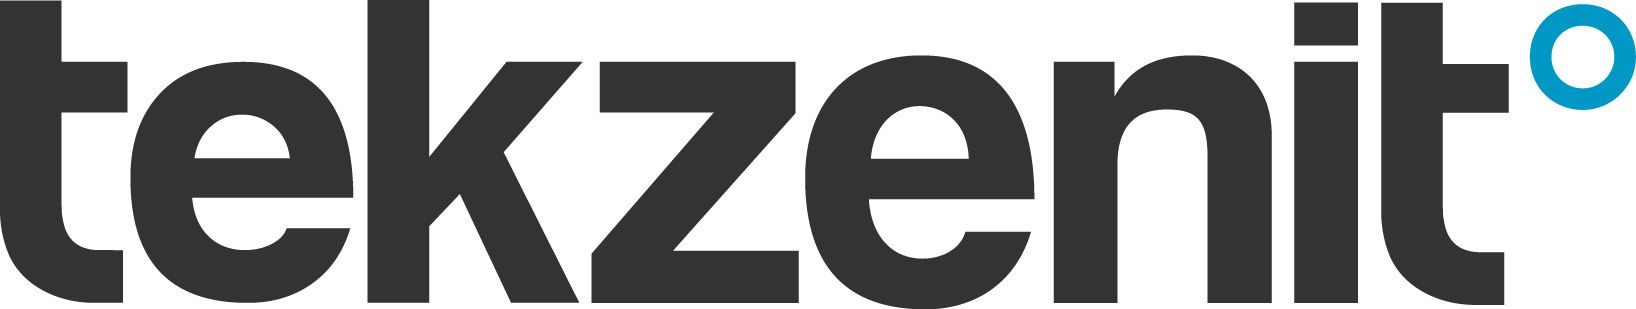 Tekzenit Logo